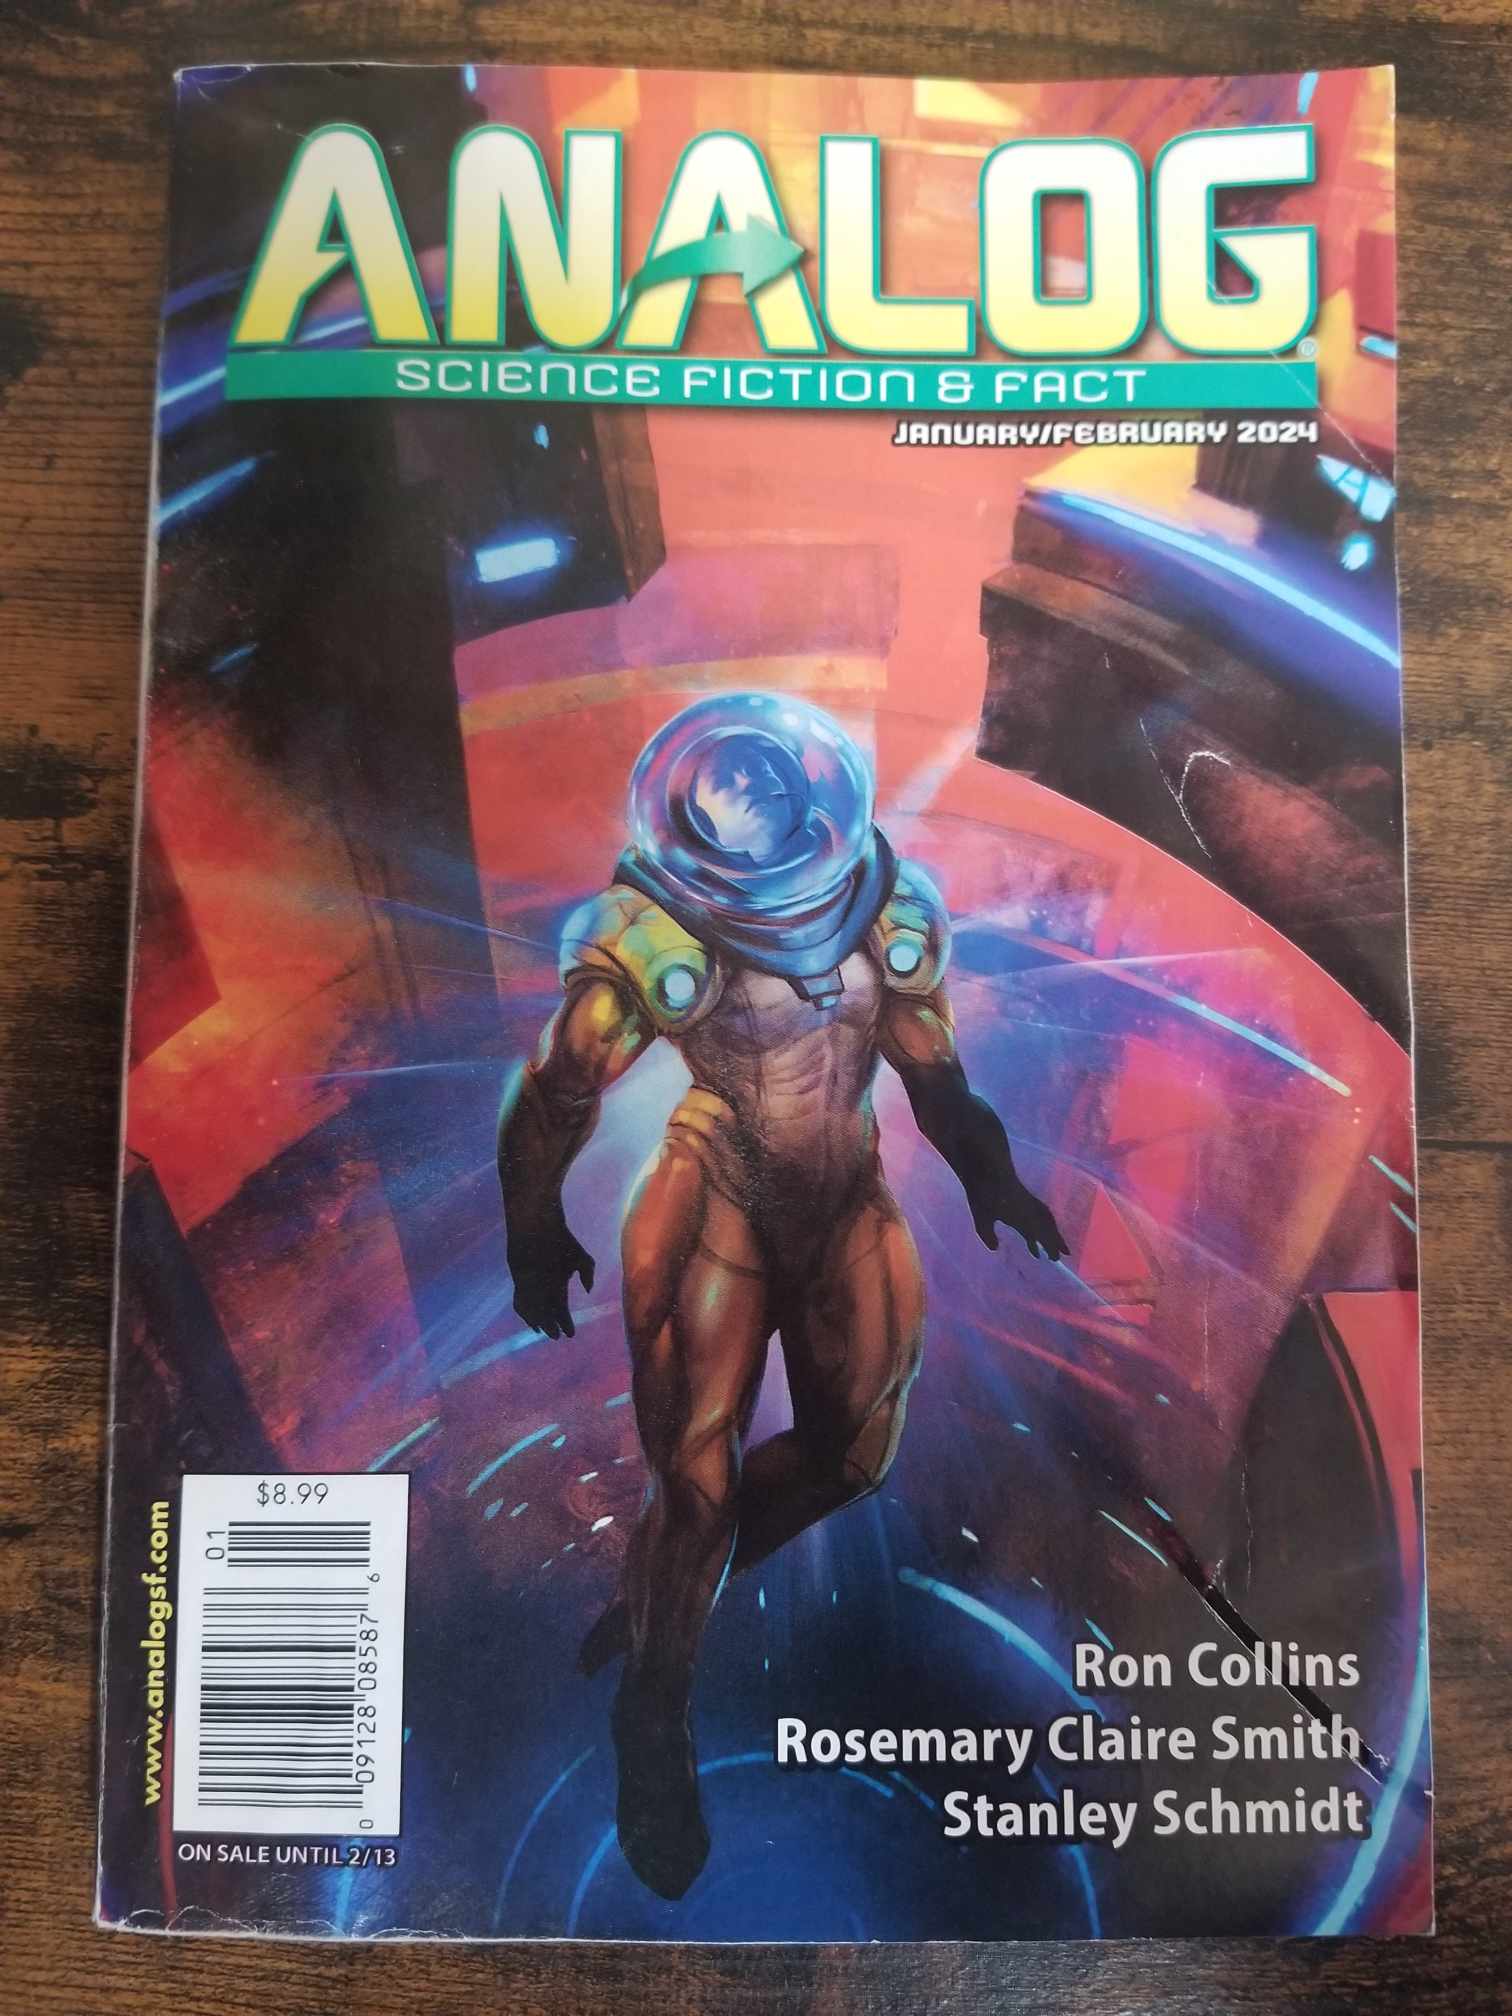 Analog SF Magazine January/February 2024